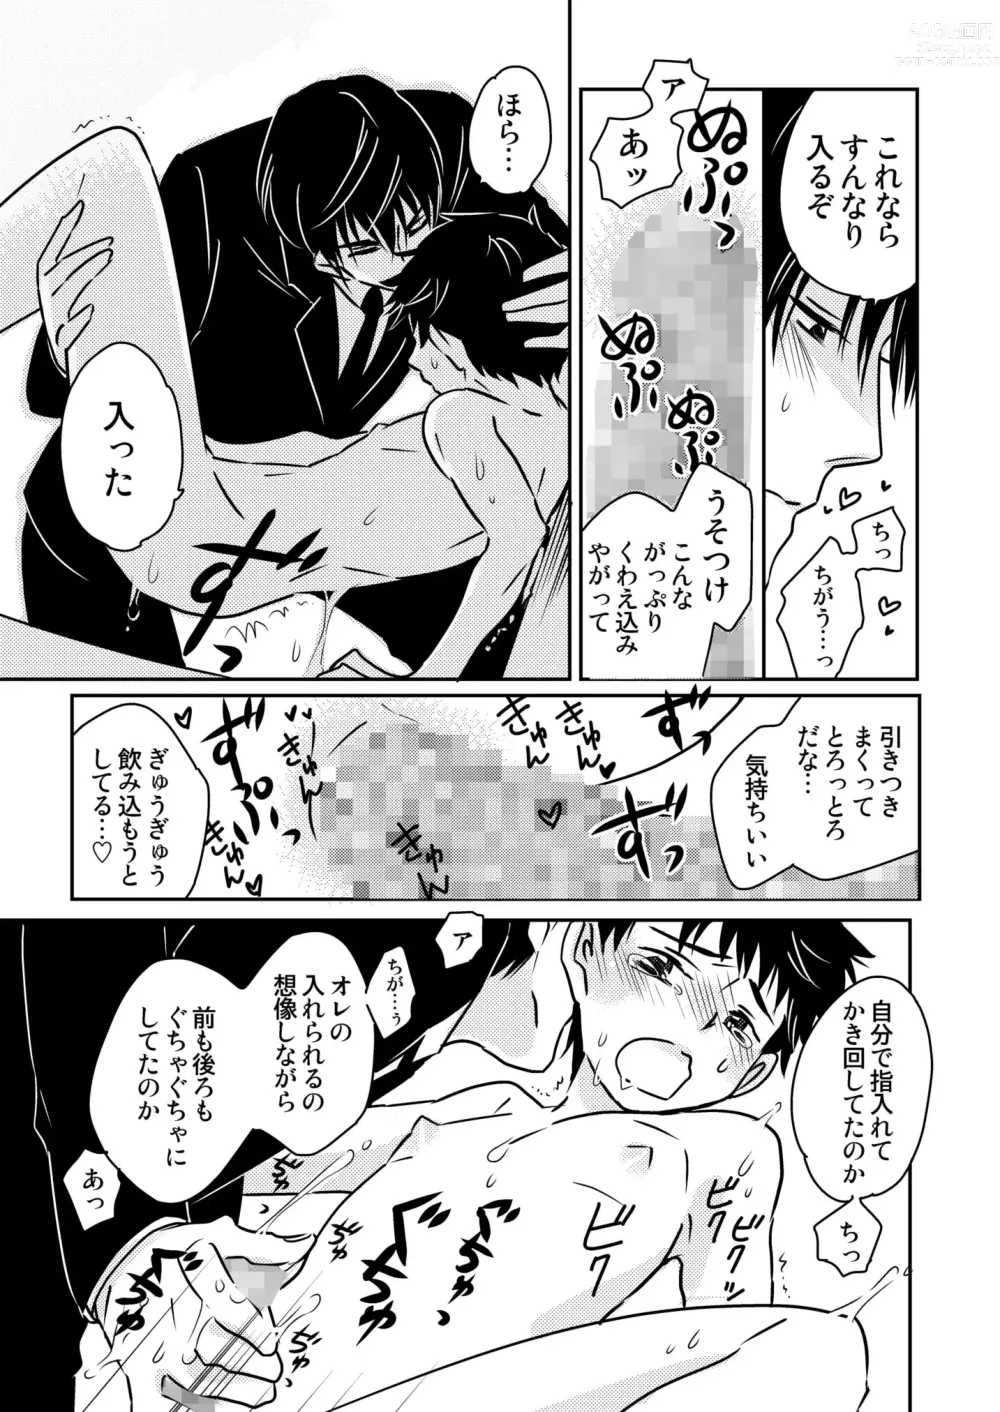 Page 19 of doujinshi Usagi no Koe 3